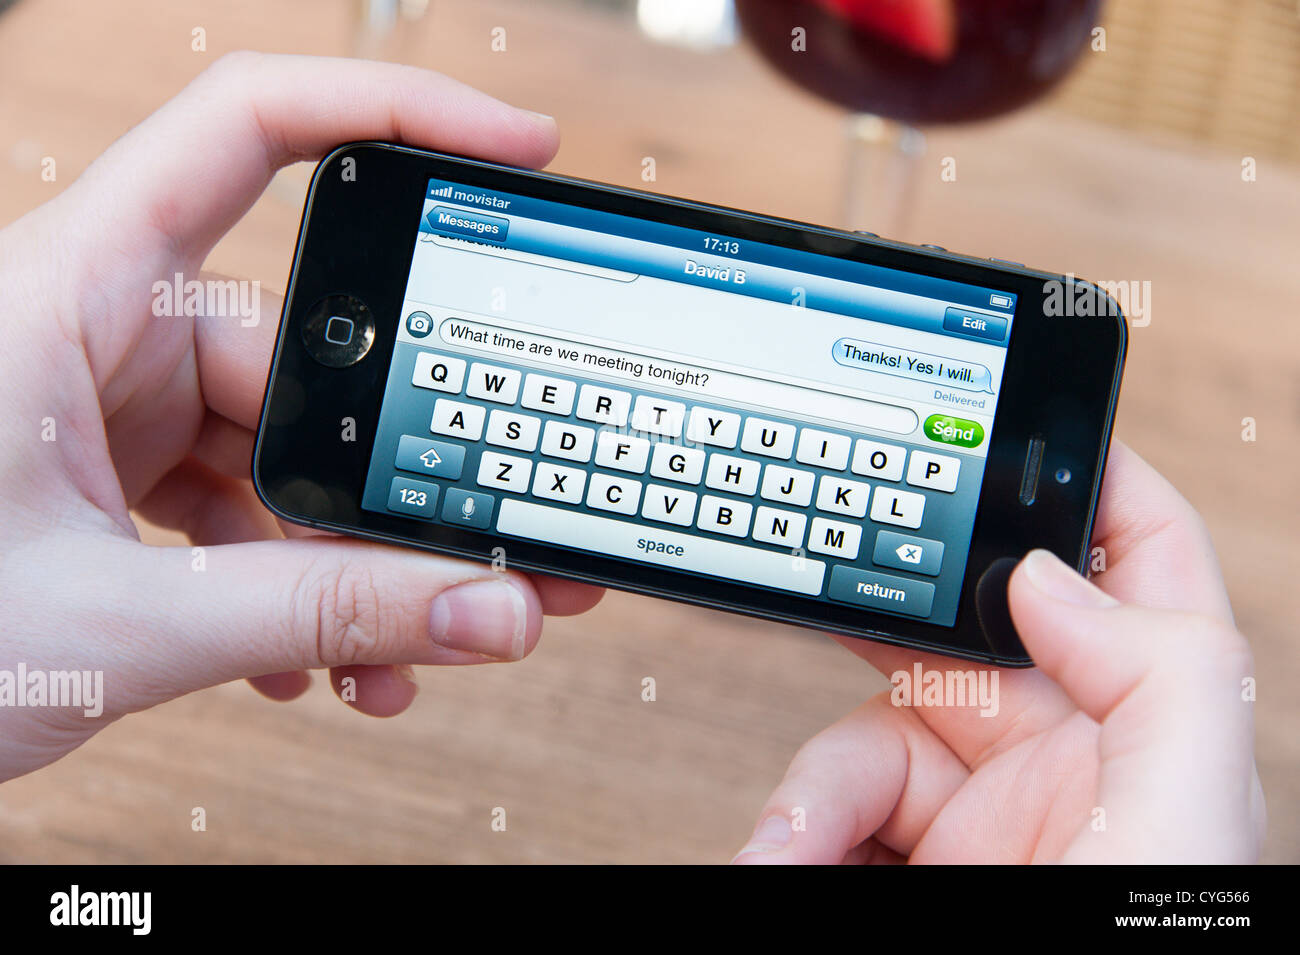 Enviar un mensaje de texto SMS en el Apple iPhone 5 Foto de stock